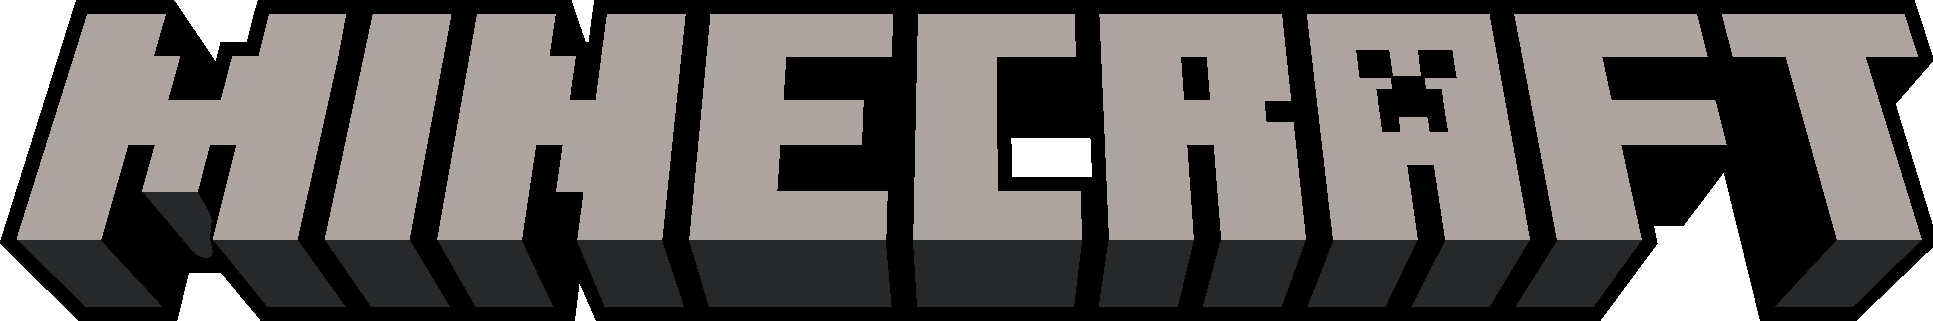 hardcore minecraft logo